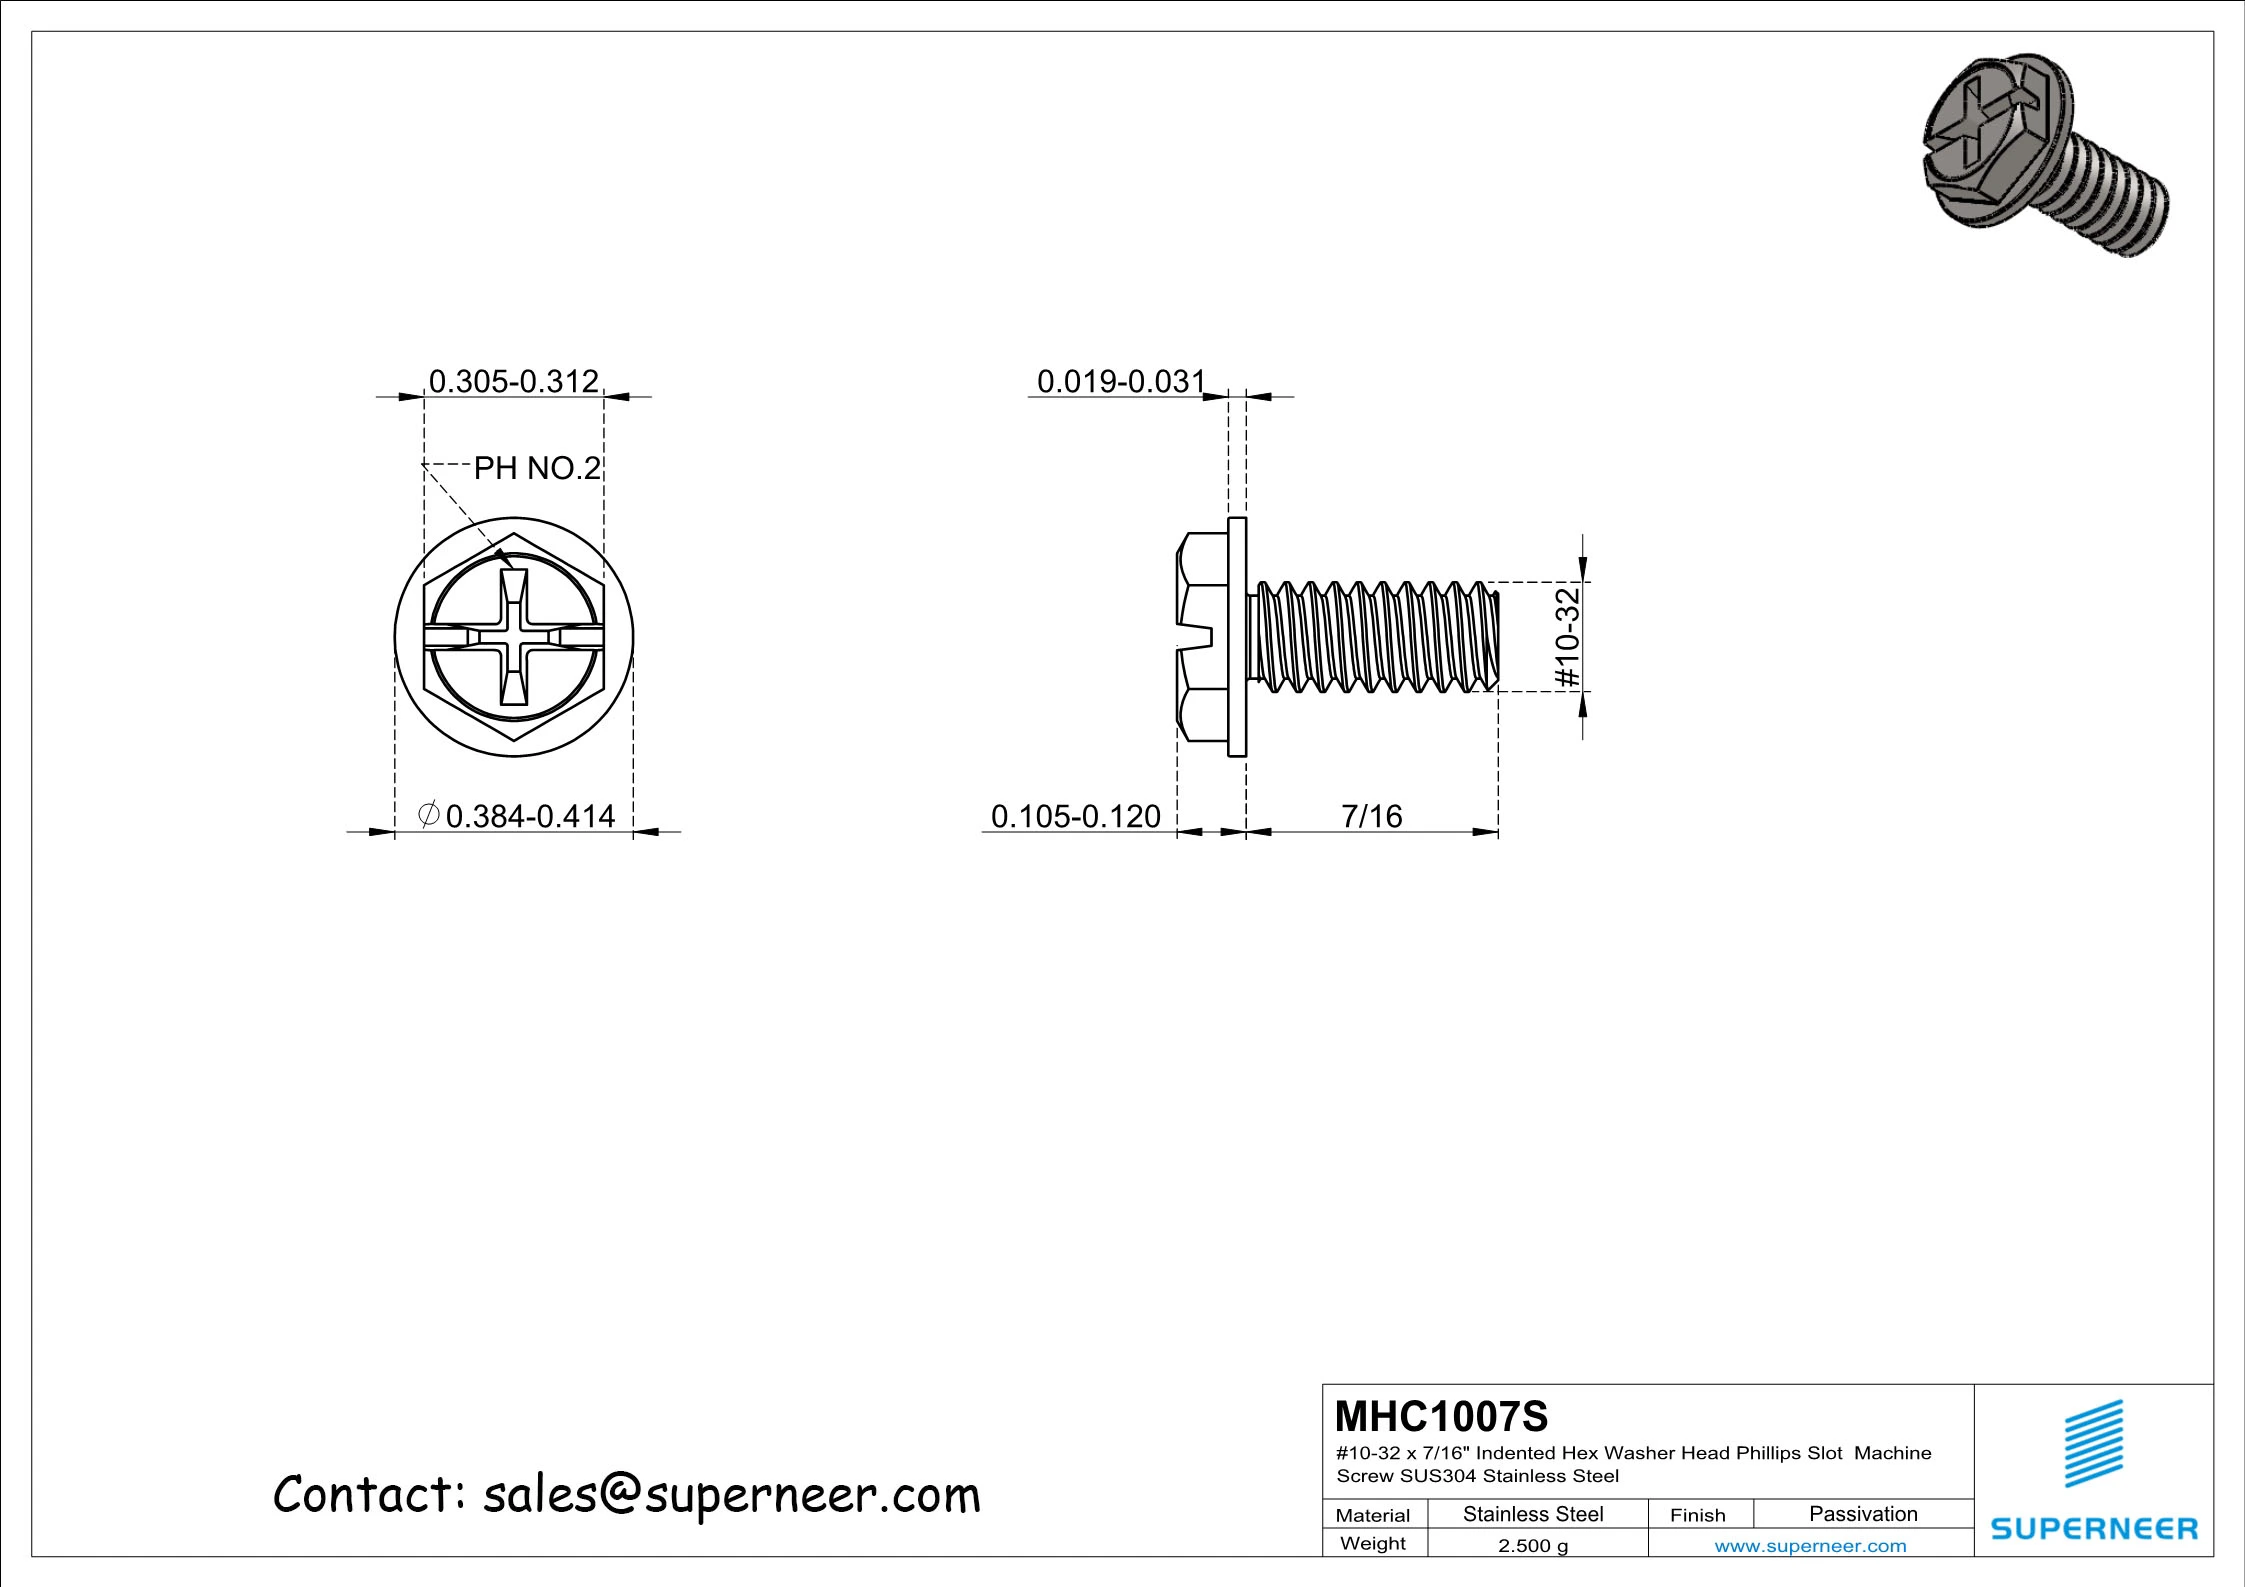 10-32 x 7/16“ Indented Hex Washer Head Phillips Slot Machine Screw SUS304 Stainless Steel Inox